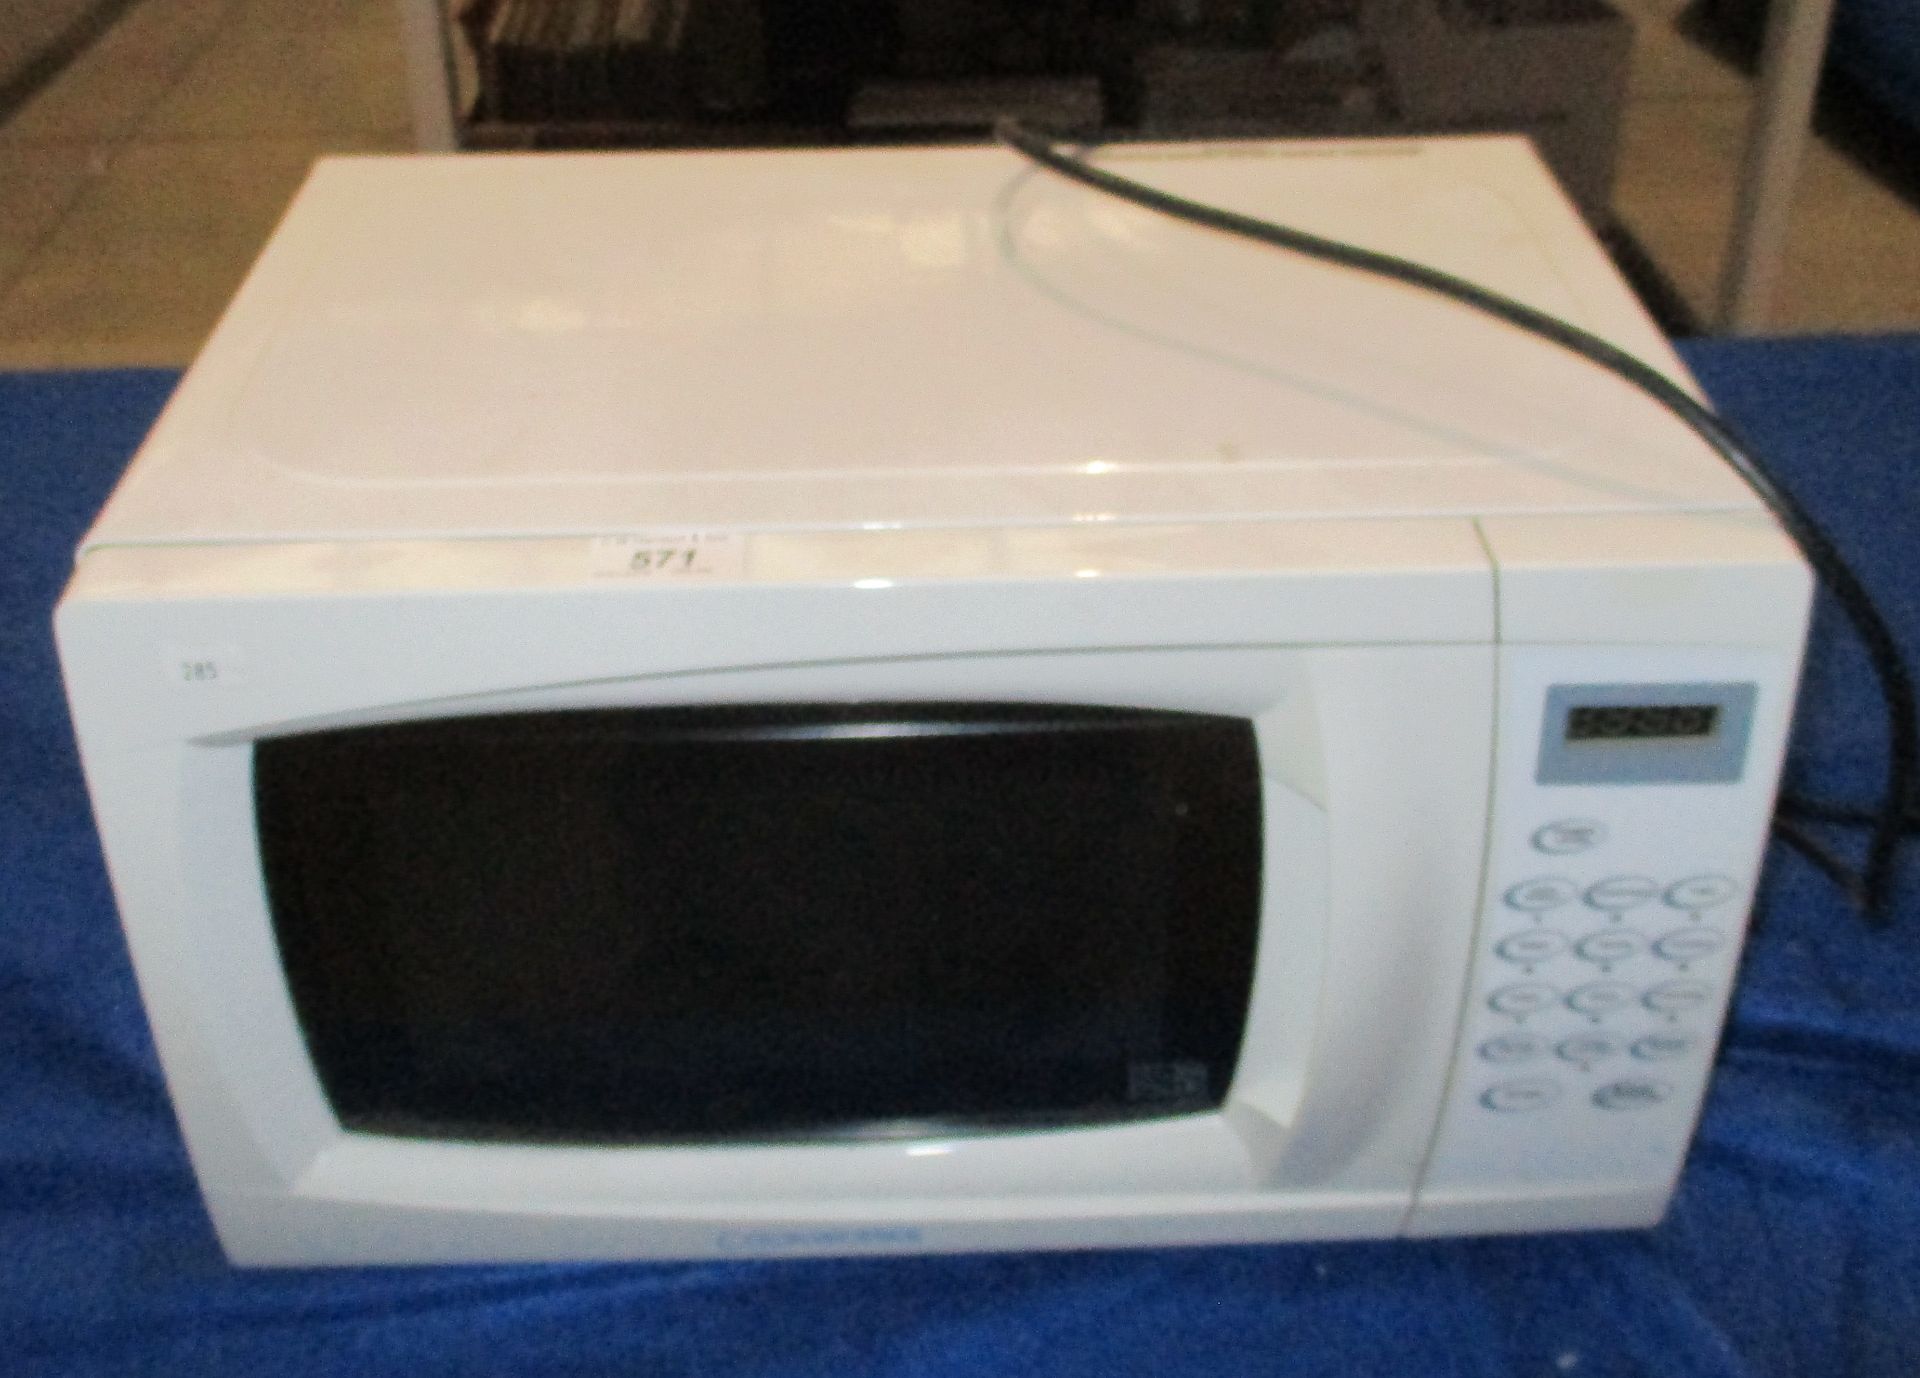 Cookworks microwave oven